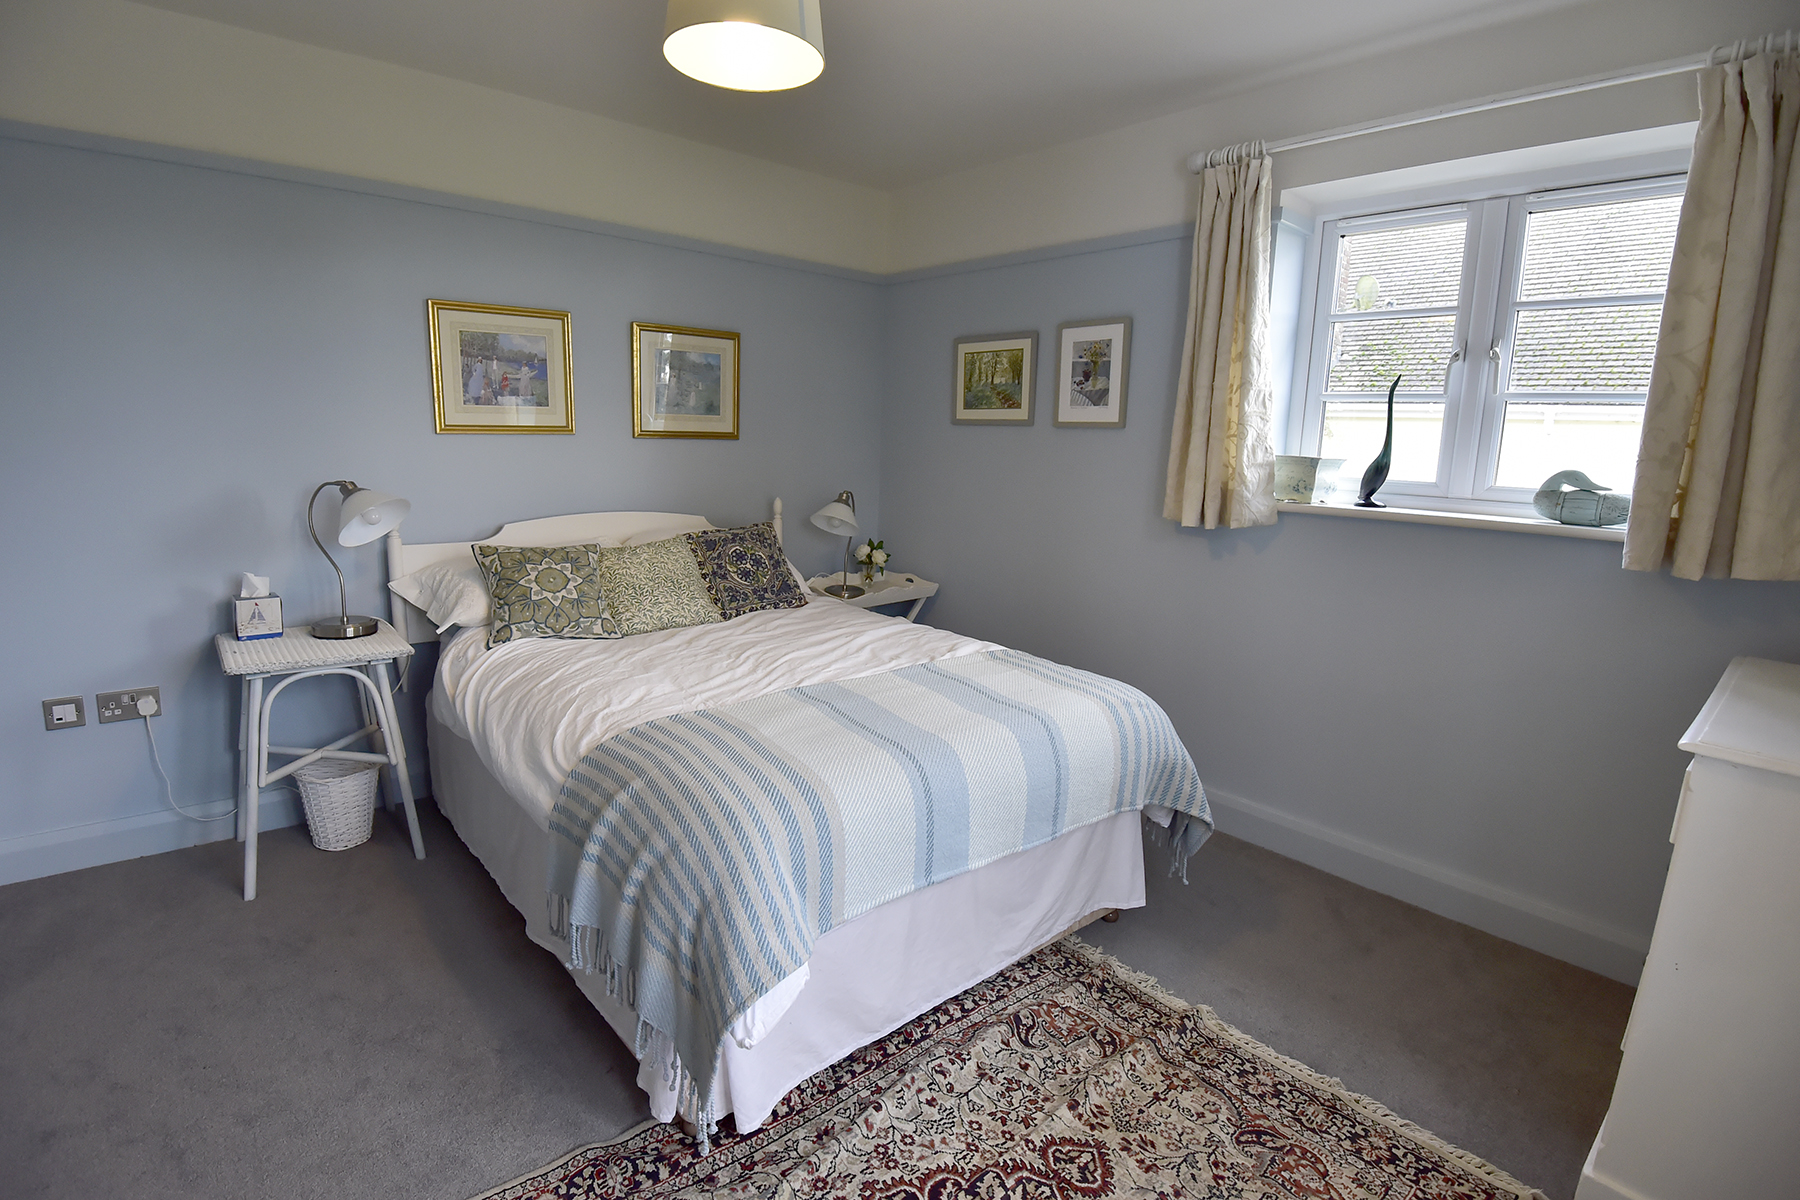 Bedroom Interior Design in Brighton, Hove and East Sussex